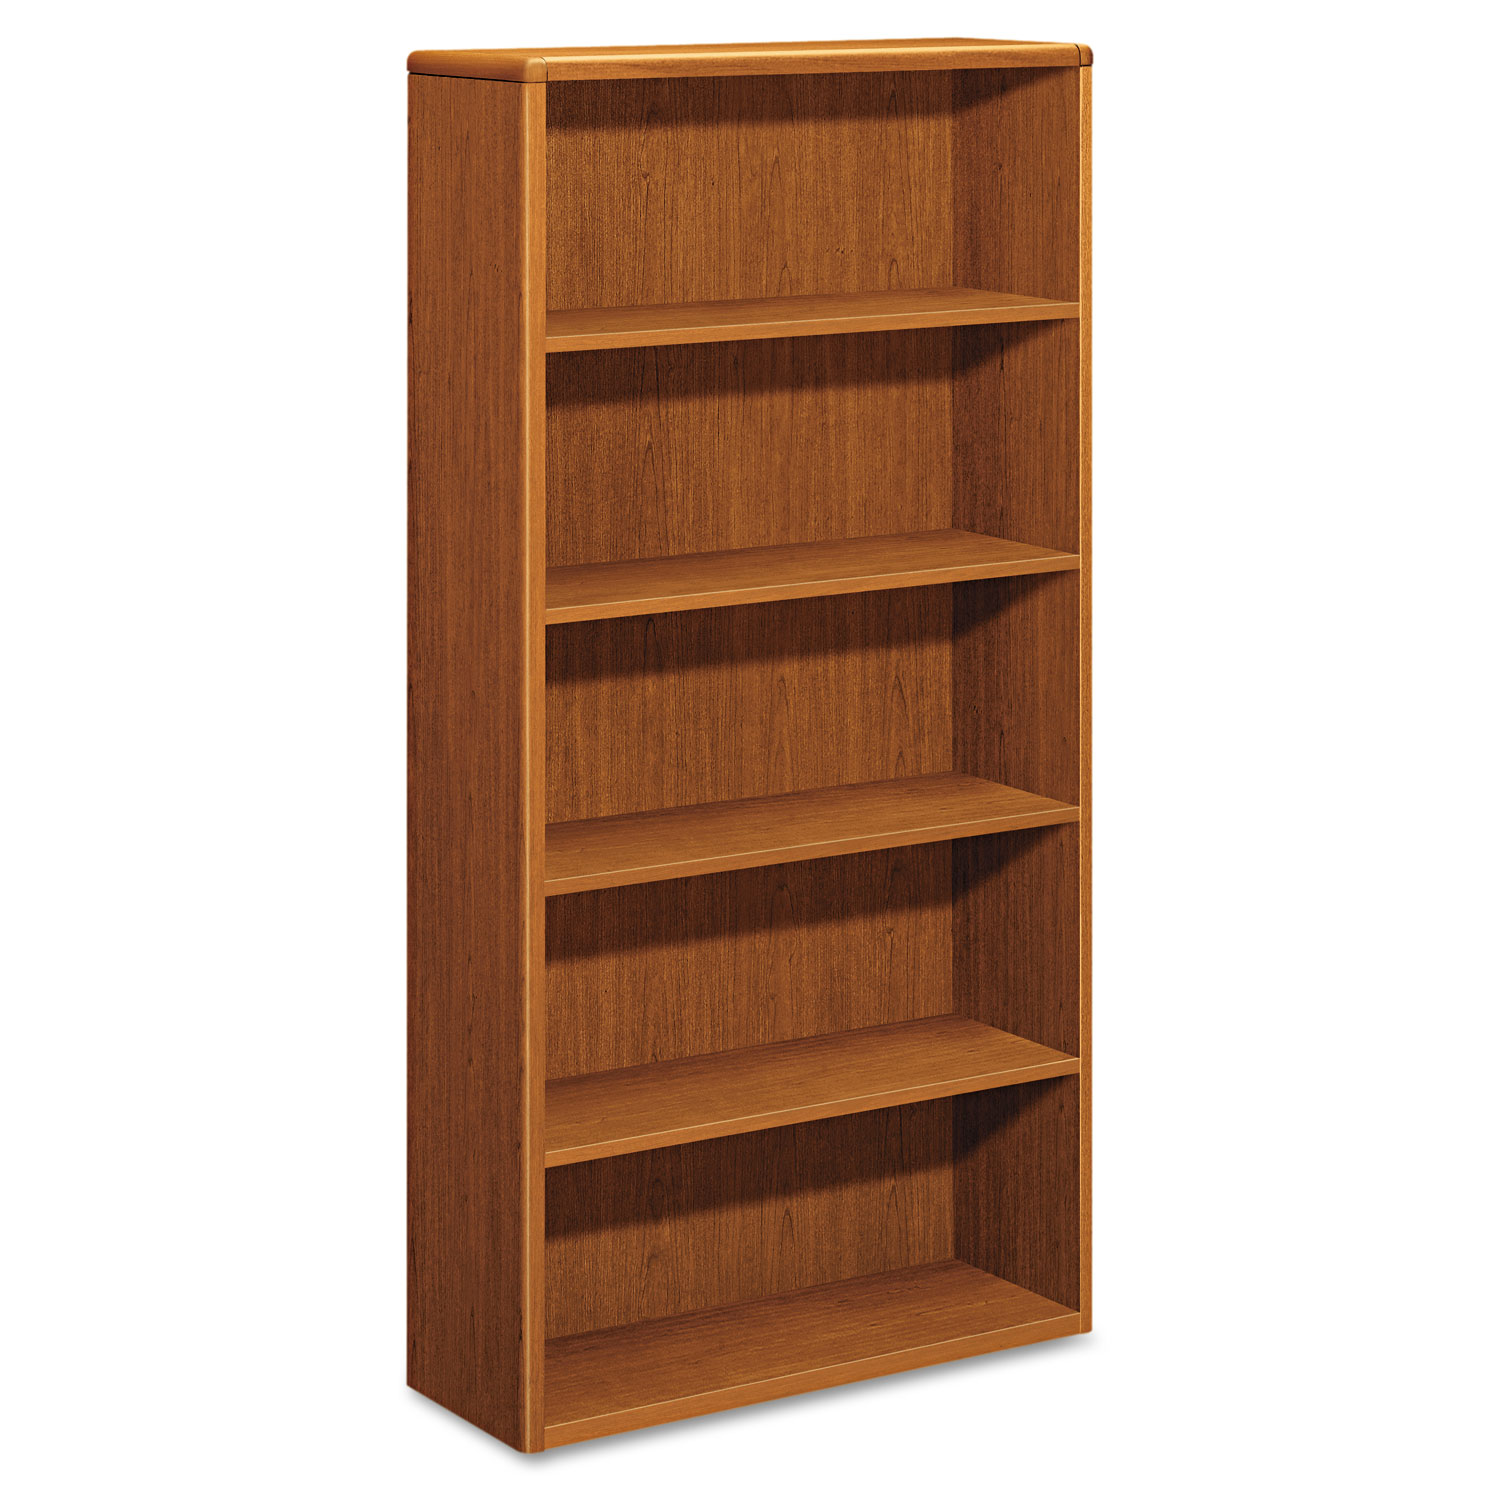 10700 Series Wood Bookcase, Five Shelf, 36w x 13 1/8d x 71h, Bourbon Cherry